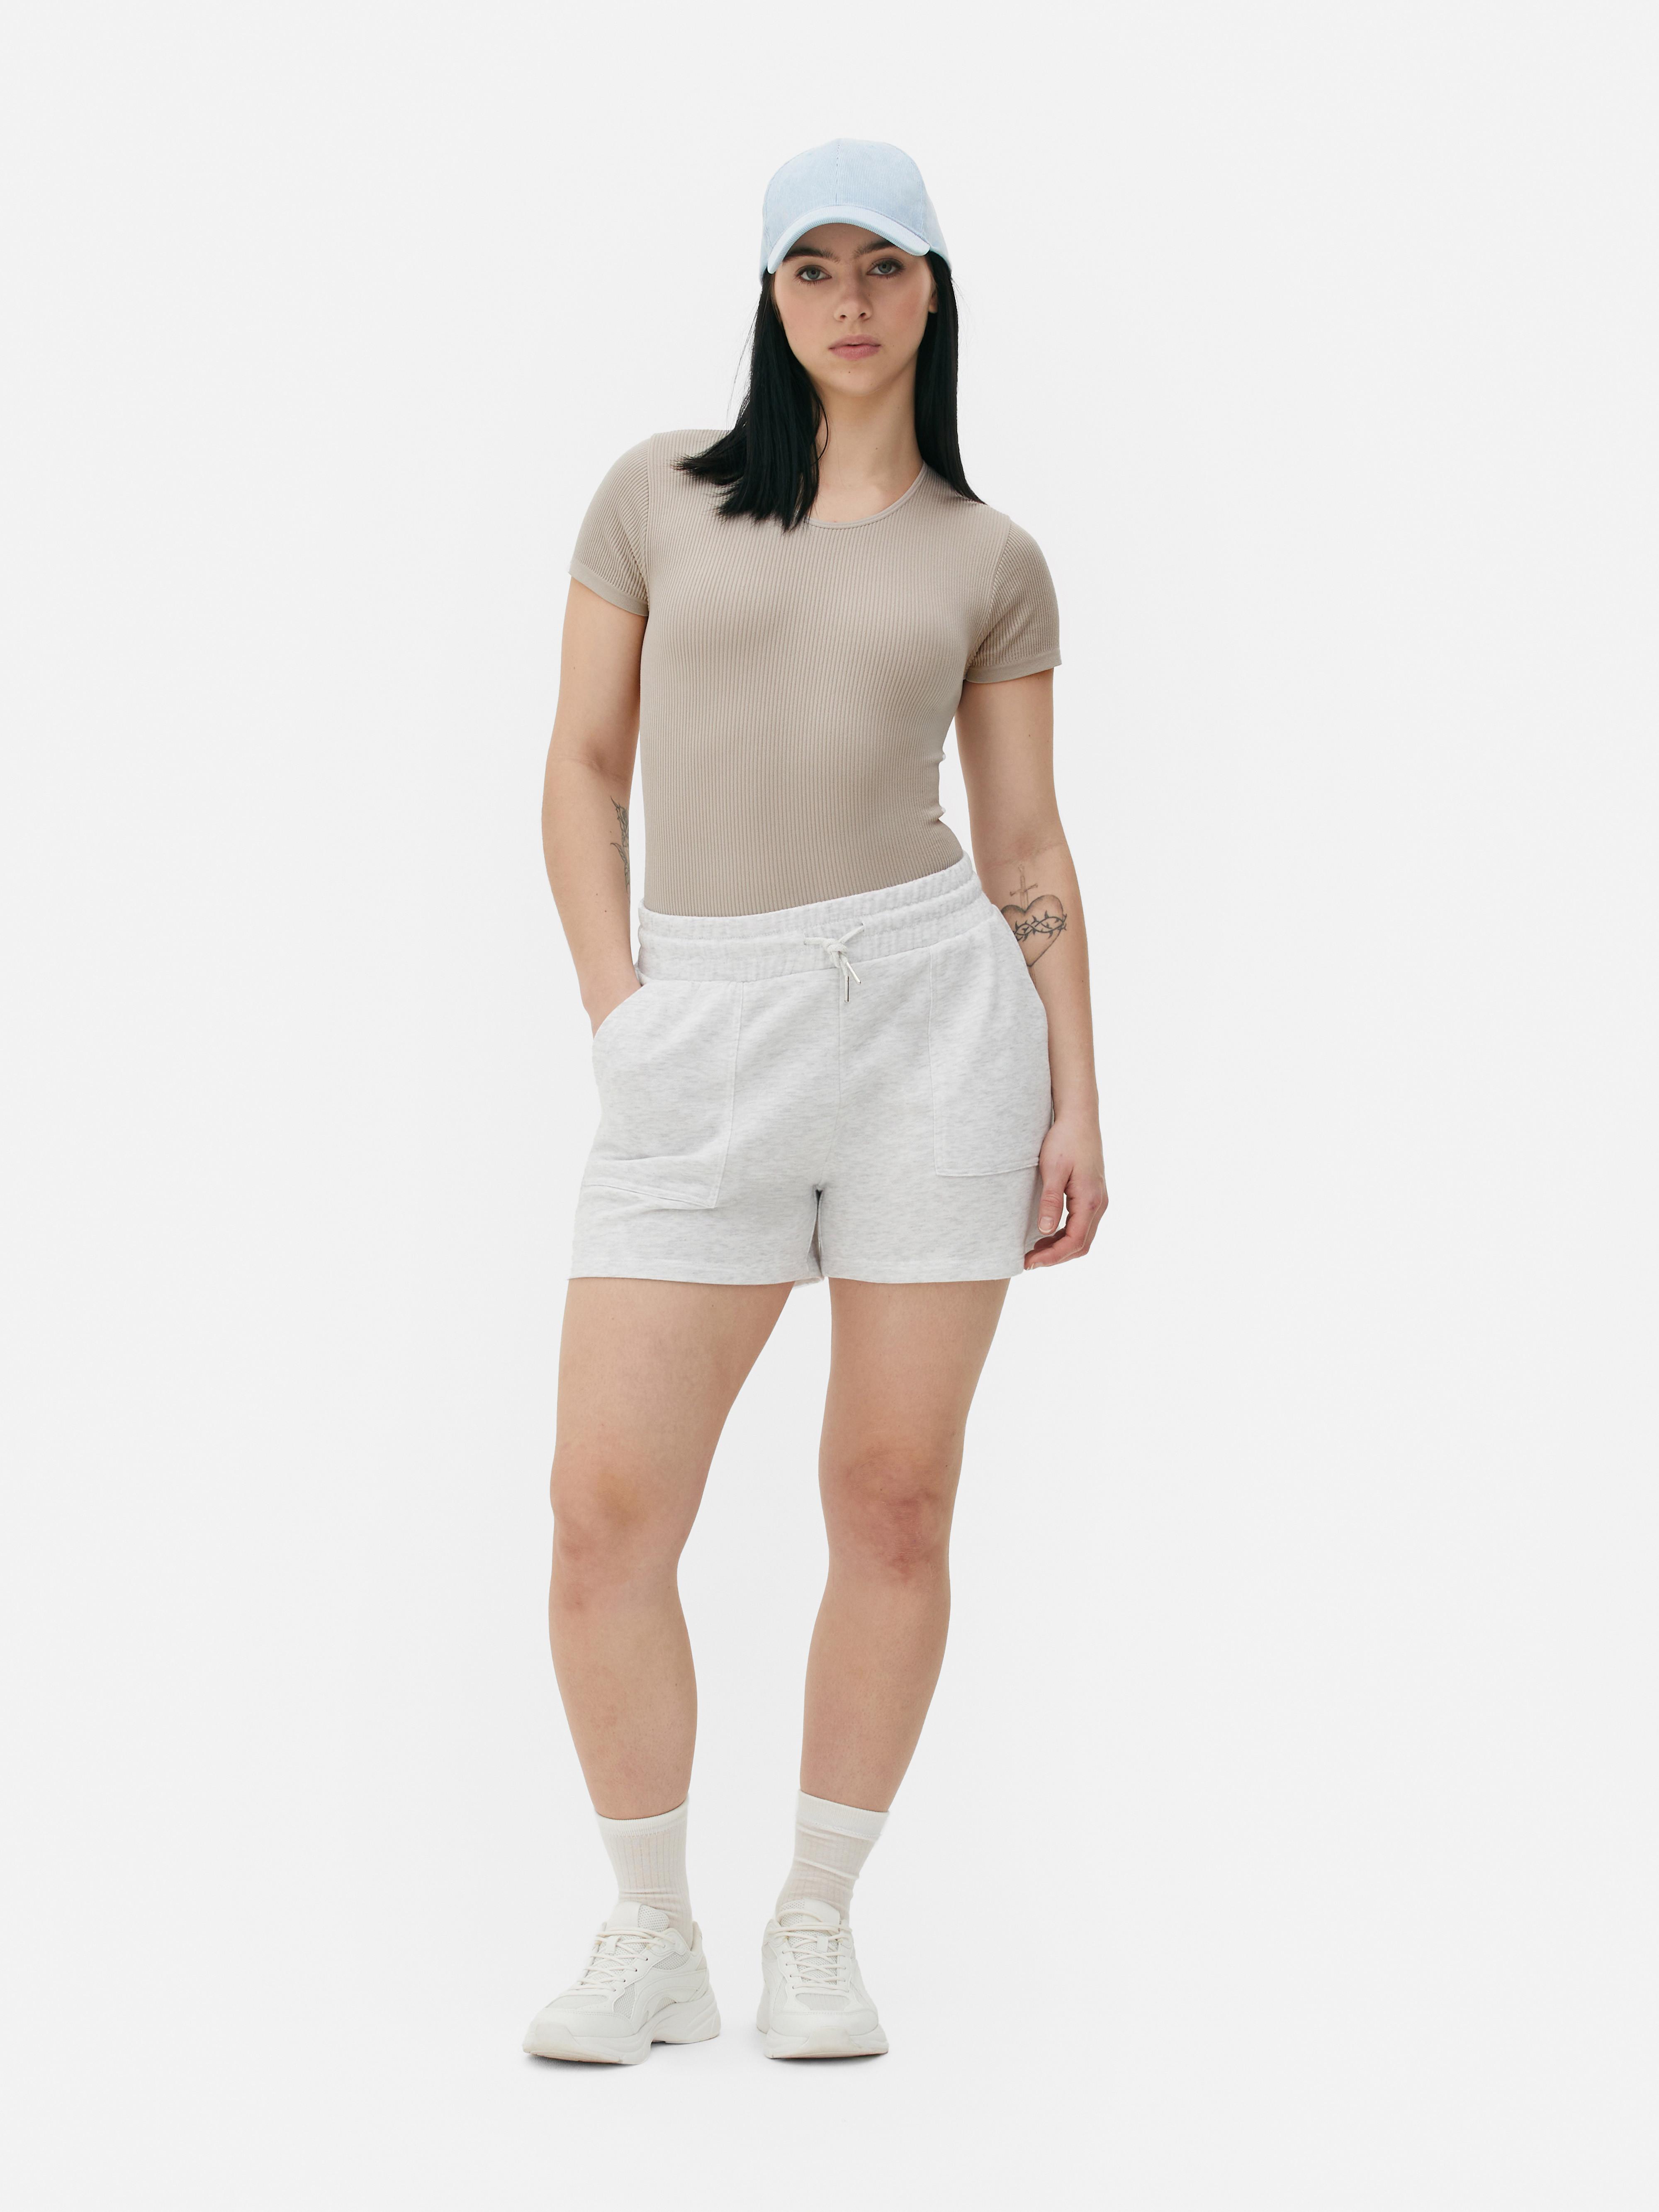 Primark white bodysuit